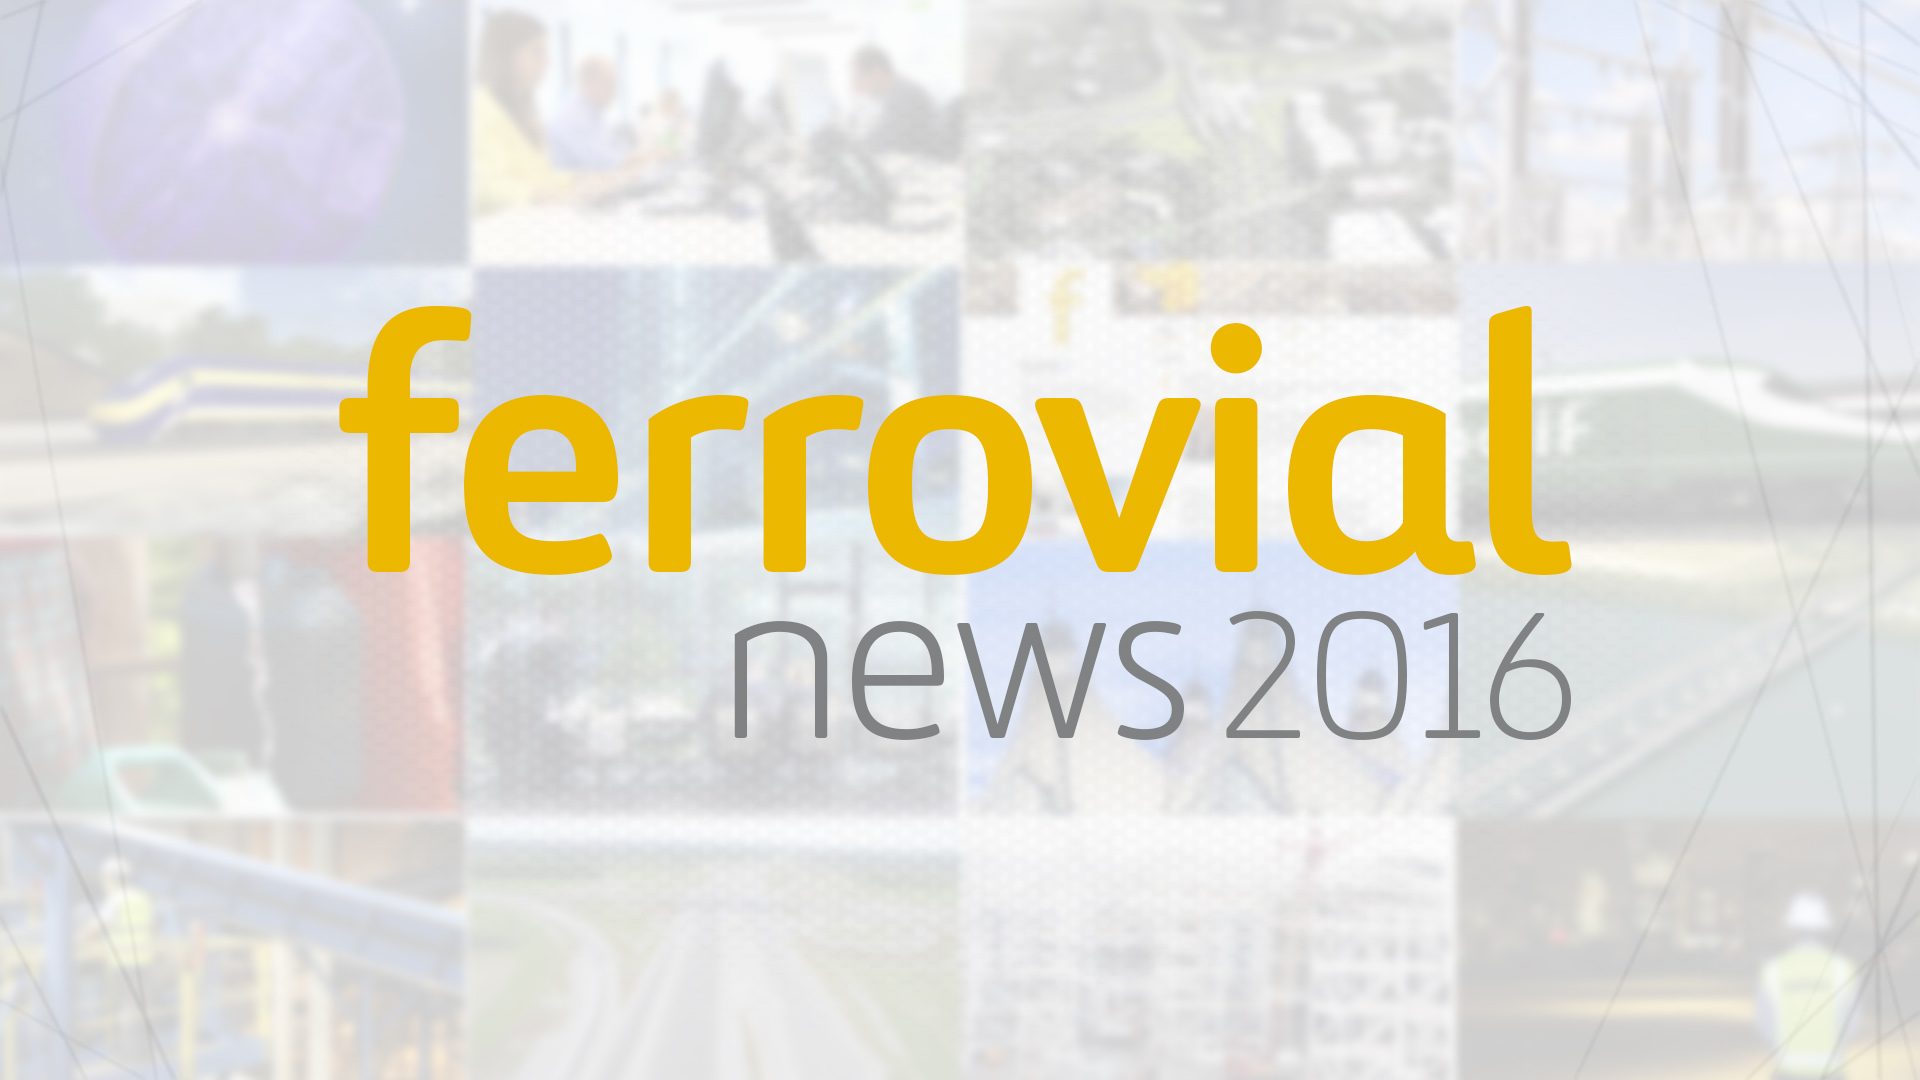 Ferrovial News 2016